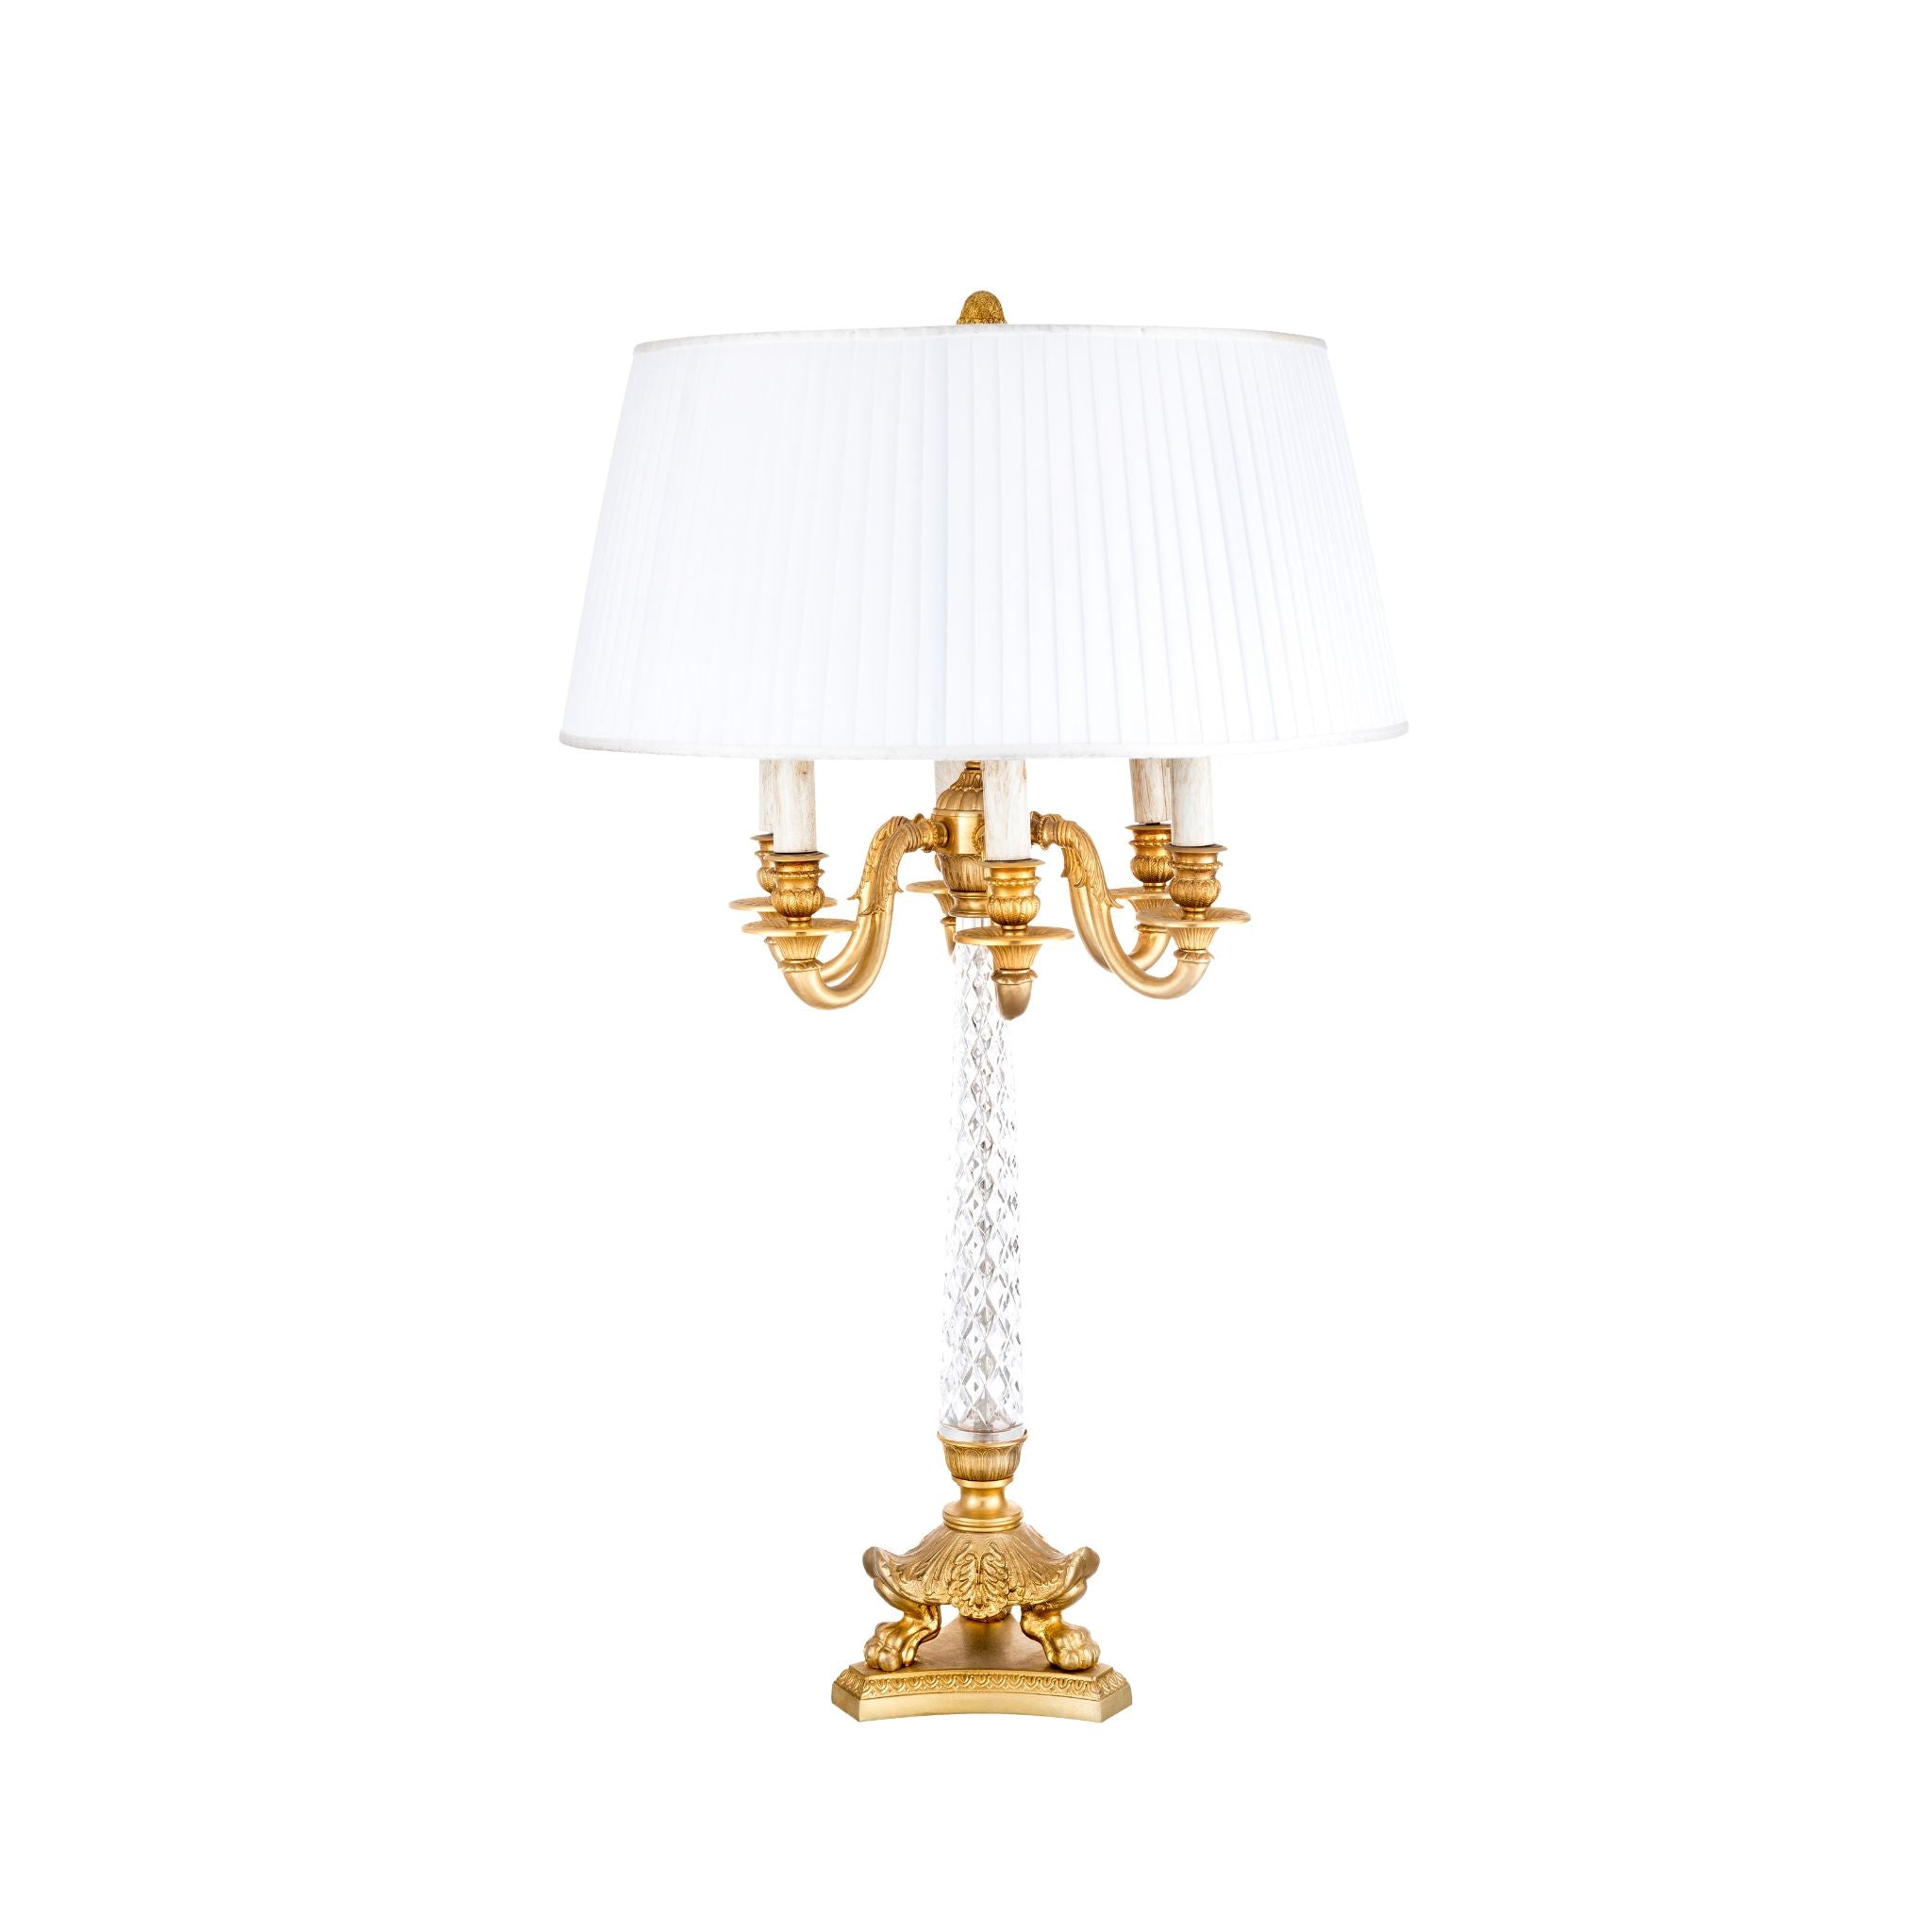 Reggia candelabra fabric lampshade with six lights - ilbronzetto